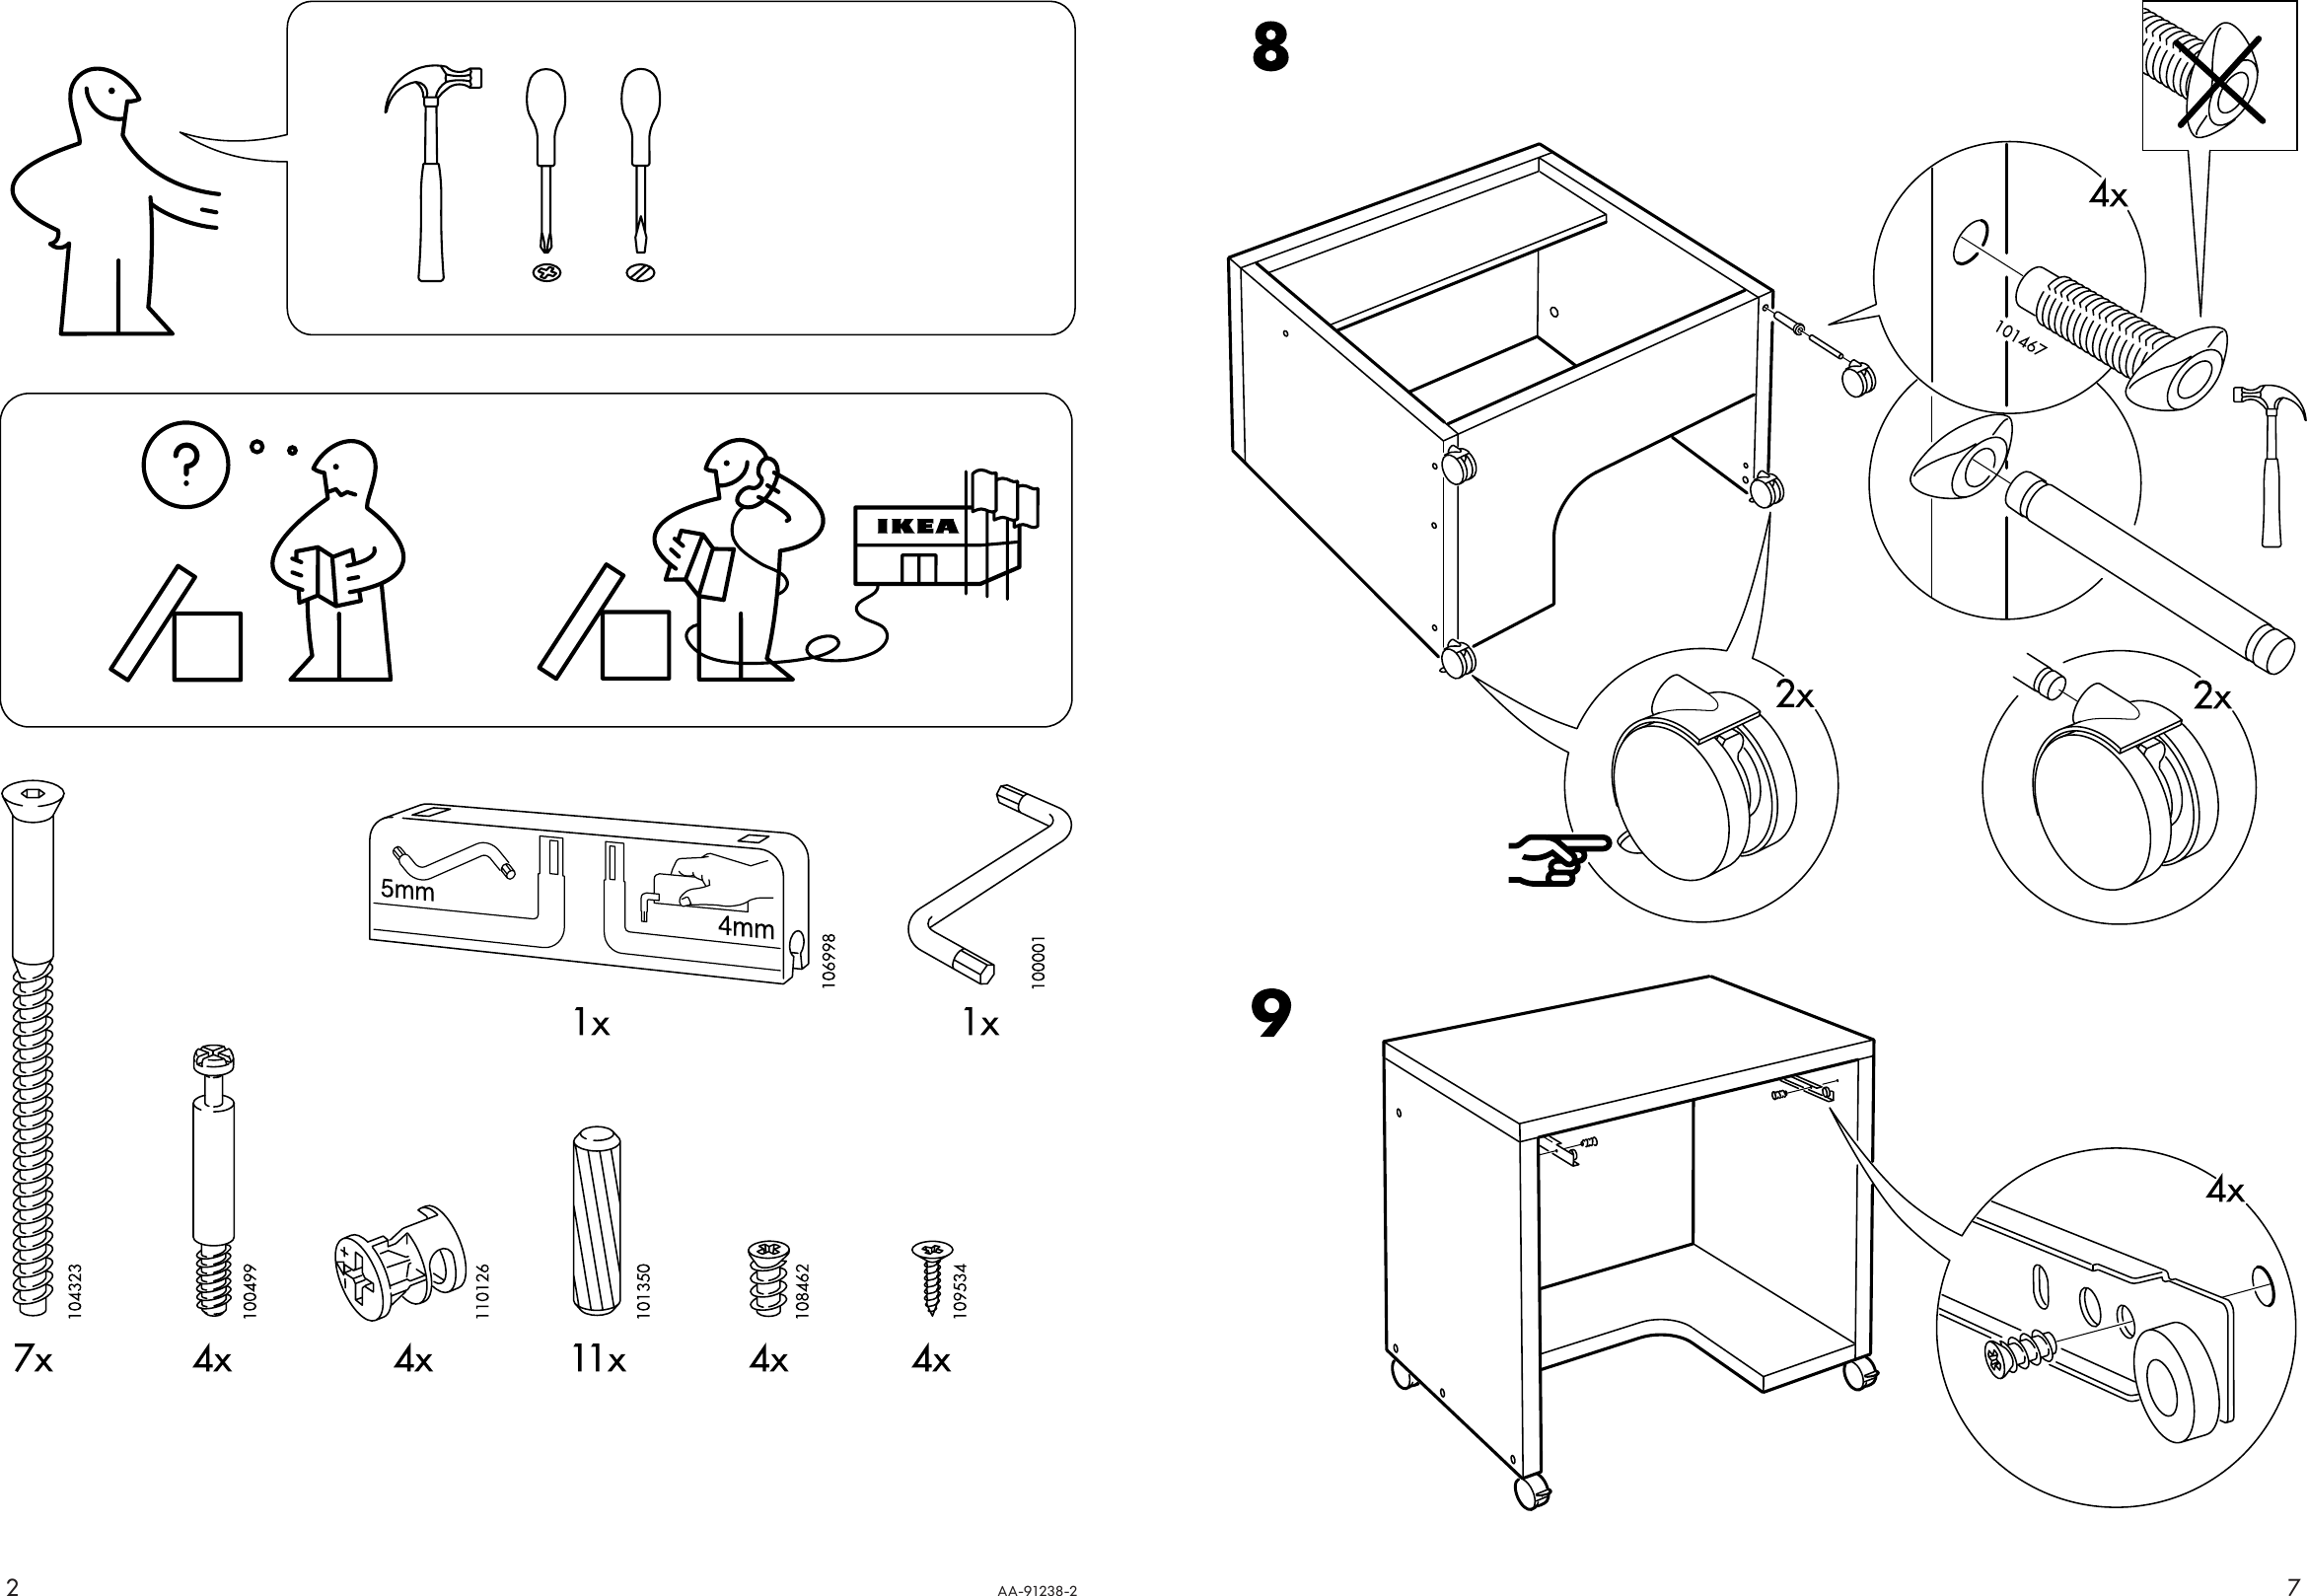 Page 2 of 4 - Ikea Ikea-Mikael-Computer-Table-W-Casters-30X20-Assembly-Instruction-6  Ikea-mikael-computer-table-w-casters-30x20-assembly-instruction